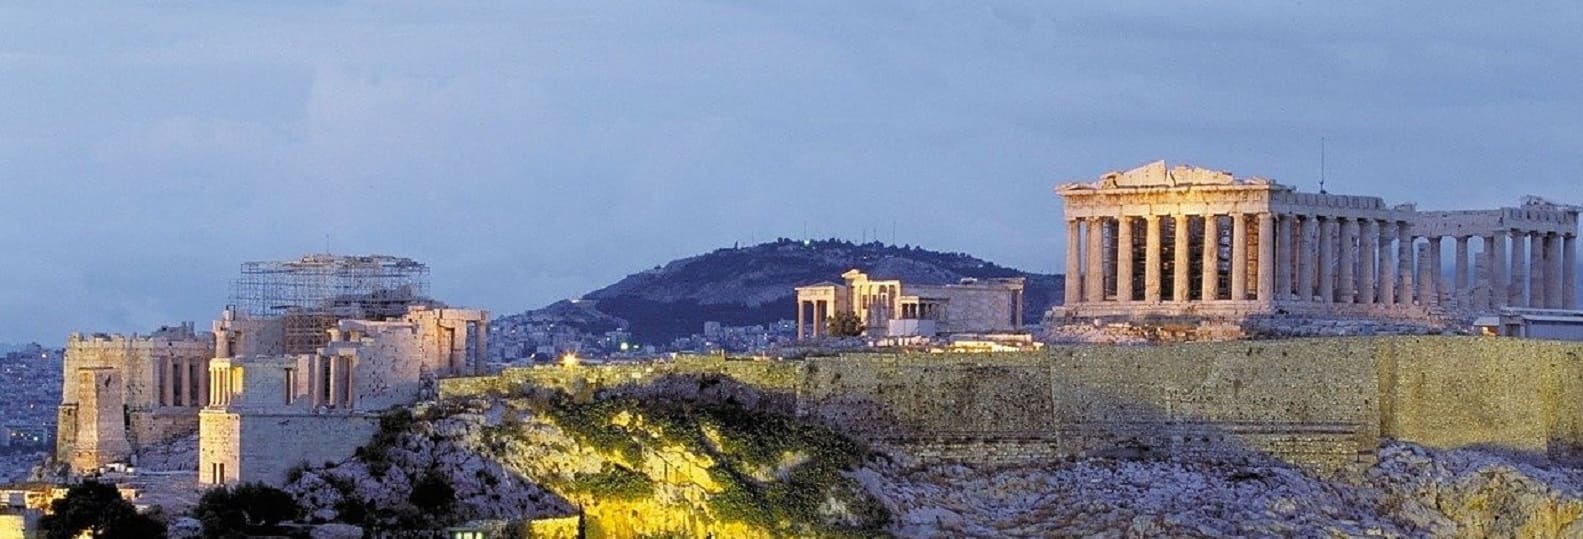 vue sur le parthenon athenes voyage culturel grece